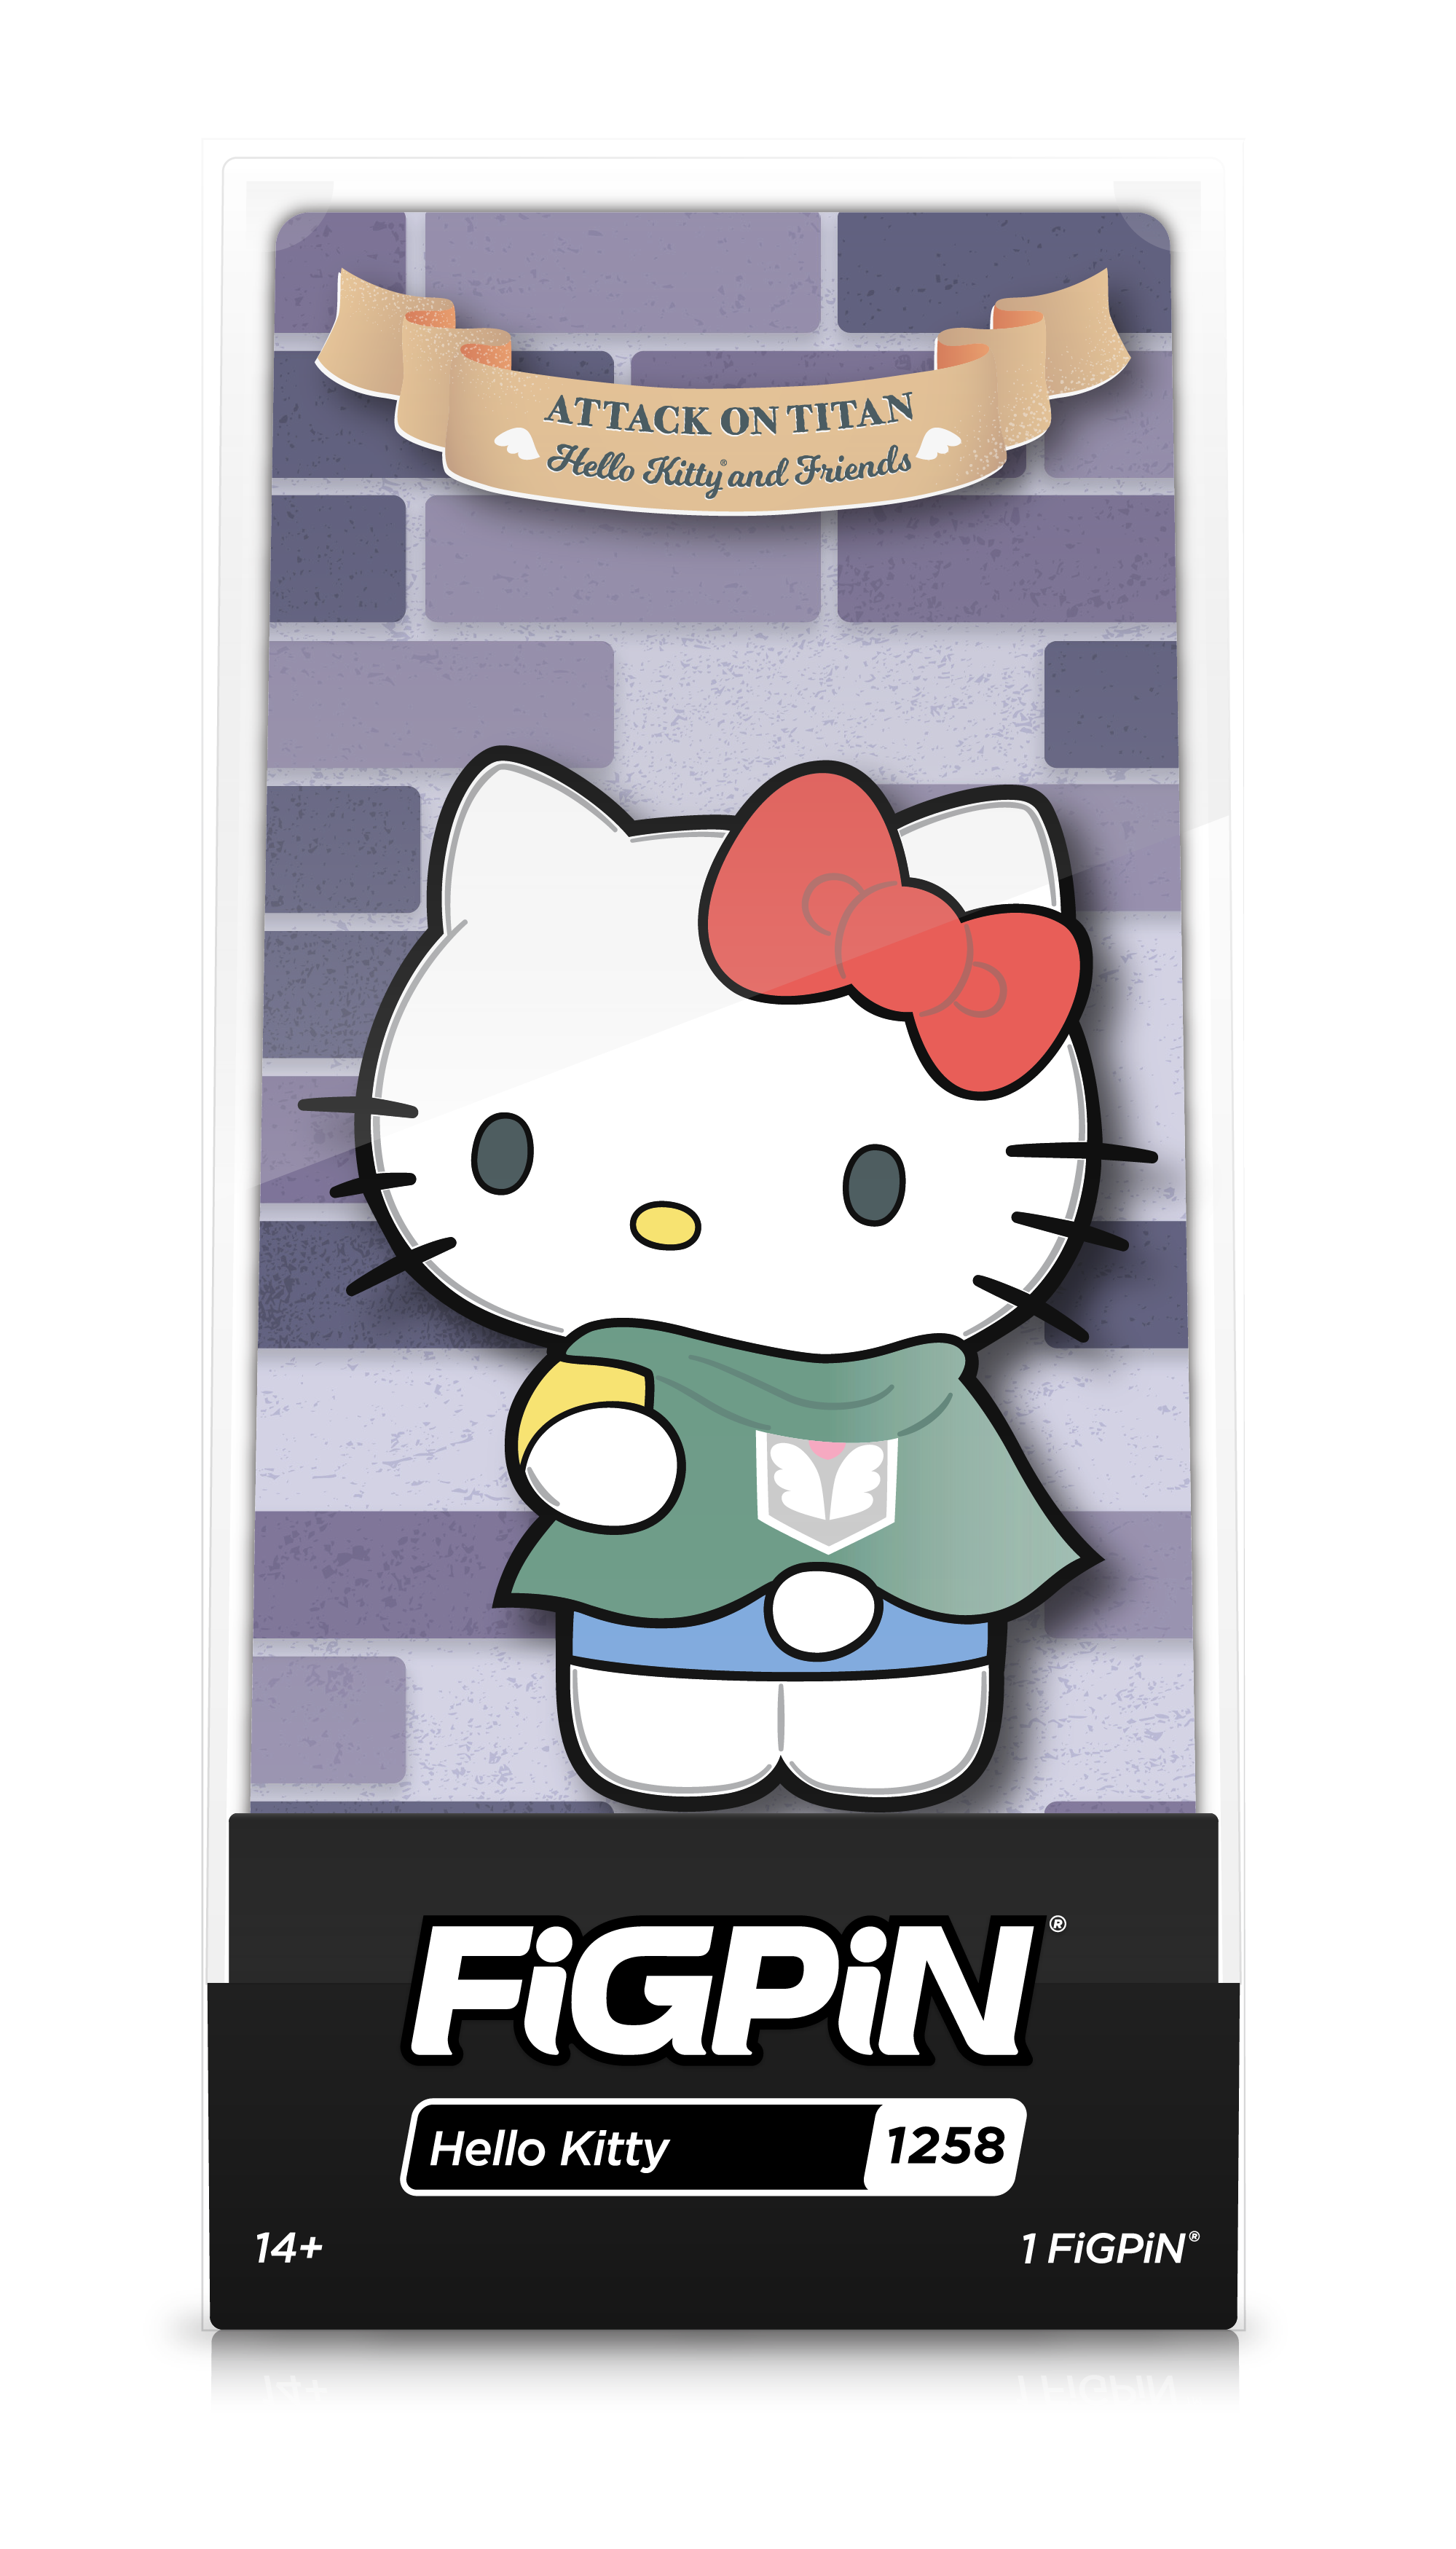 Front view of Sanrio's Hello Kitty enamel pin inside FiGPiN Display case reading “FiGPiN - Hello Kitty (1258)”